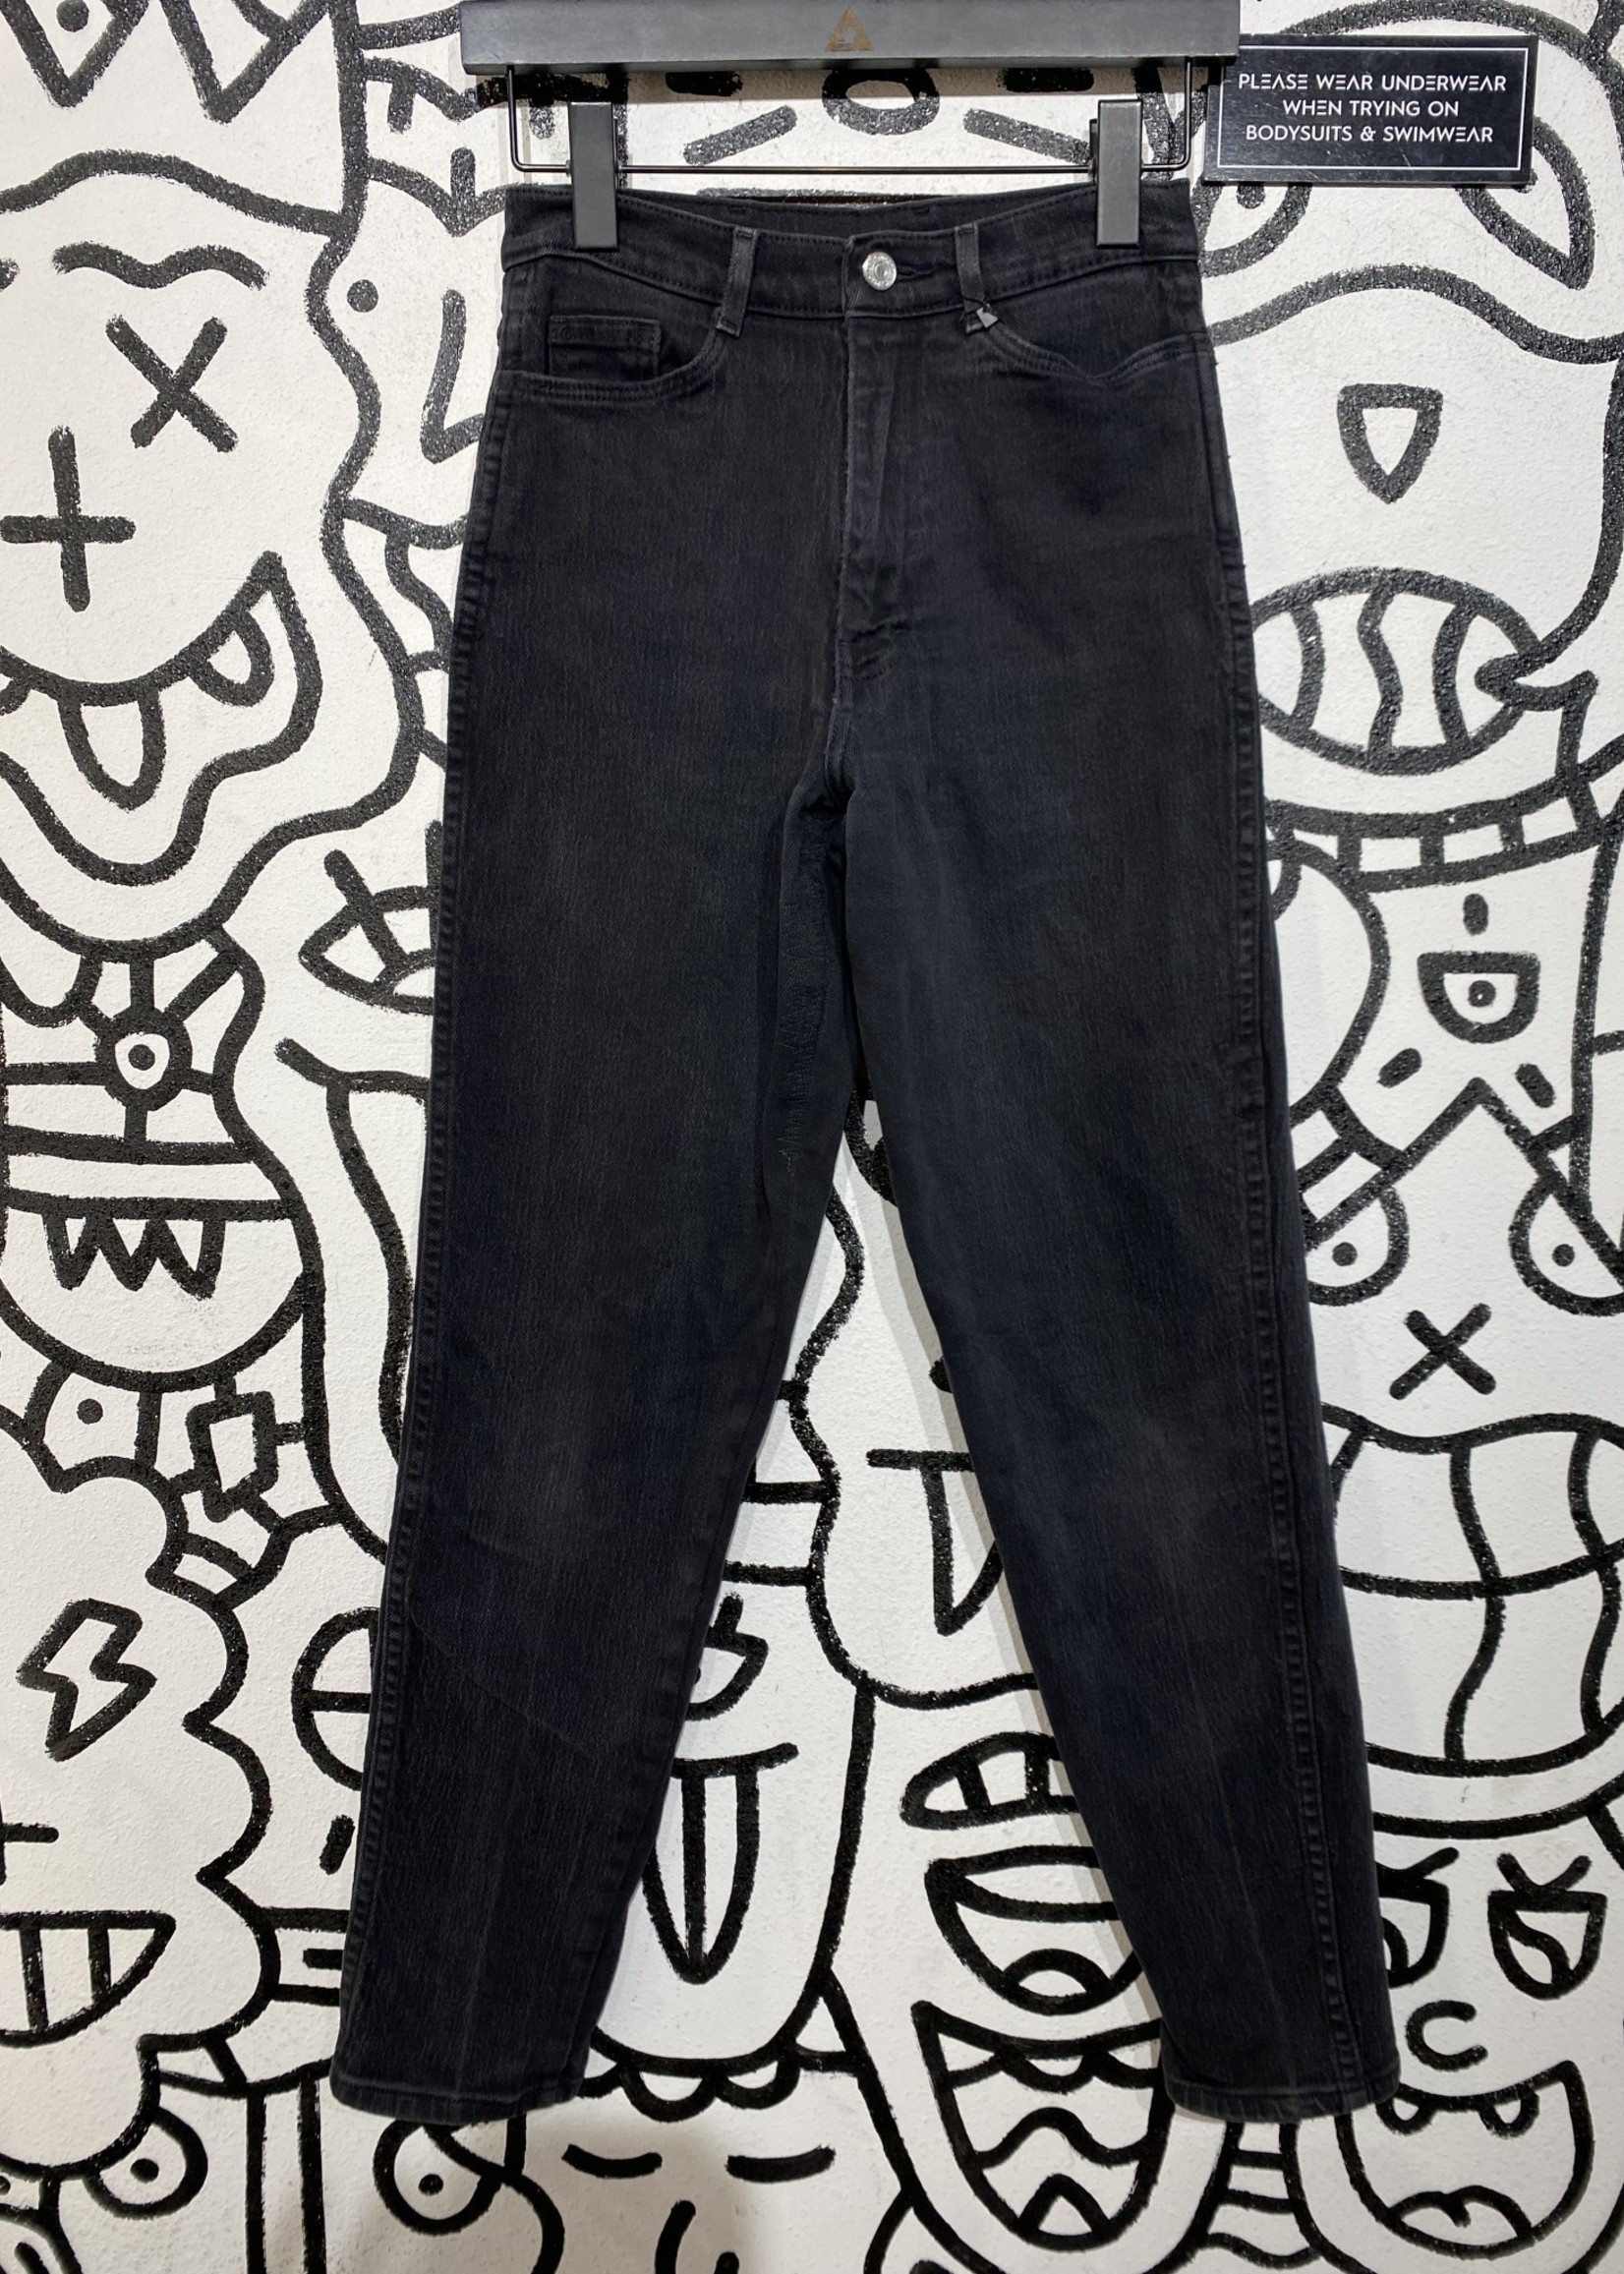 Jordache Vintage Black Denim No Pocket Jeans 25"